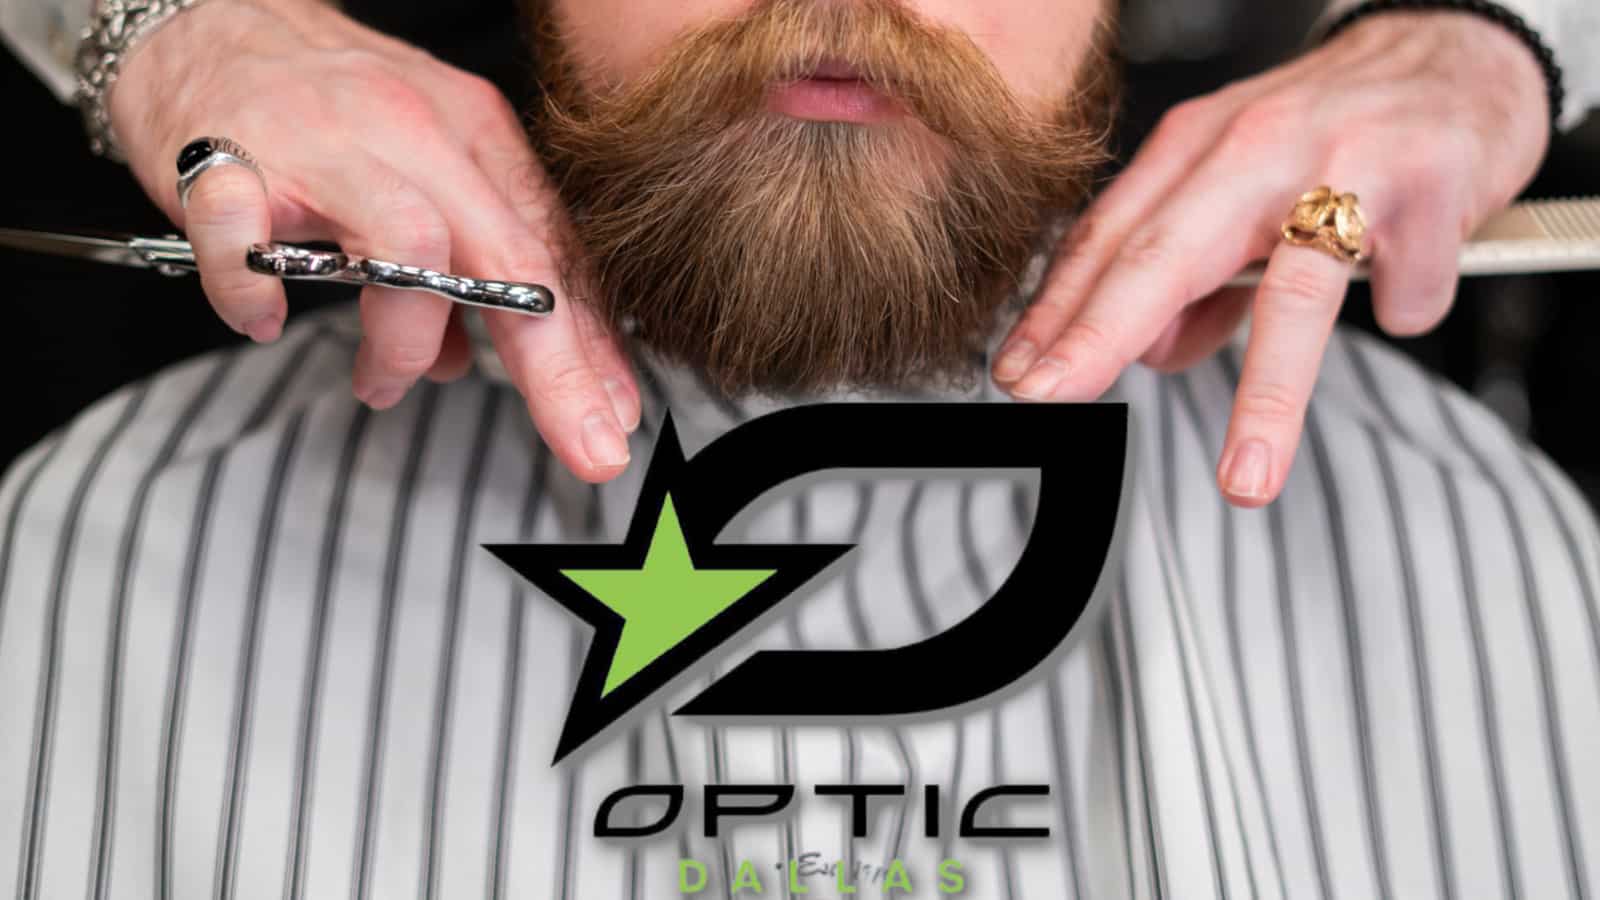 barber optic empire leak